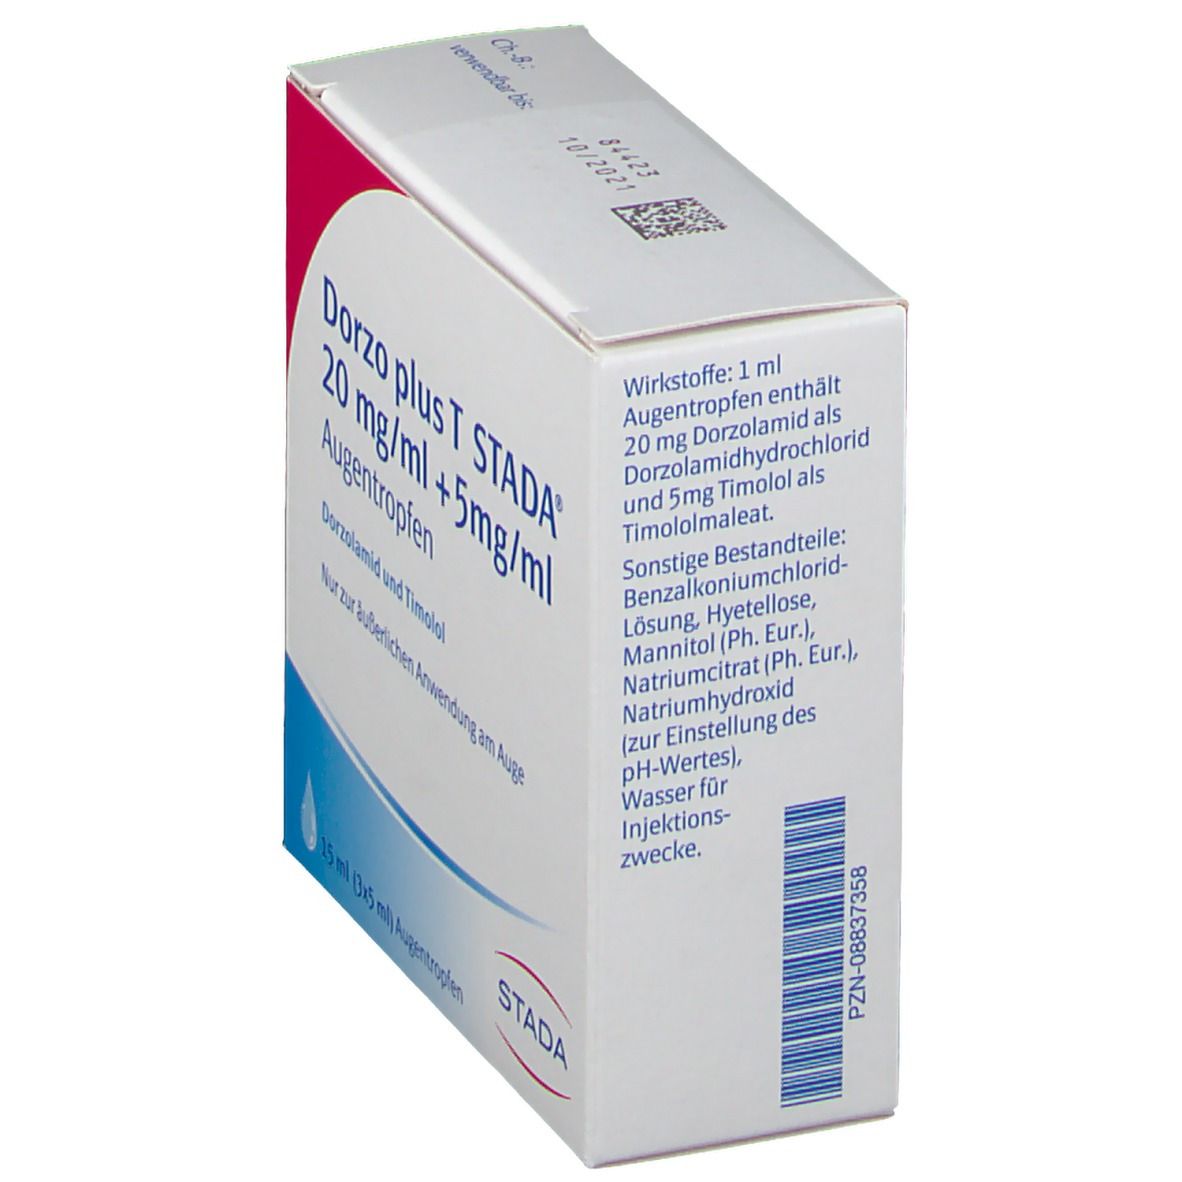 Dorzo plus T STADA® 20 mg/ml + 5 mg/ml